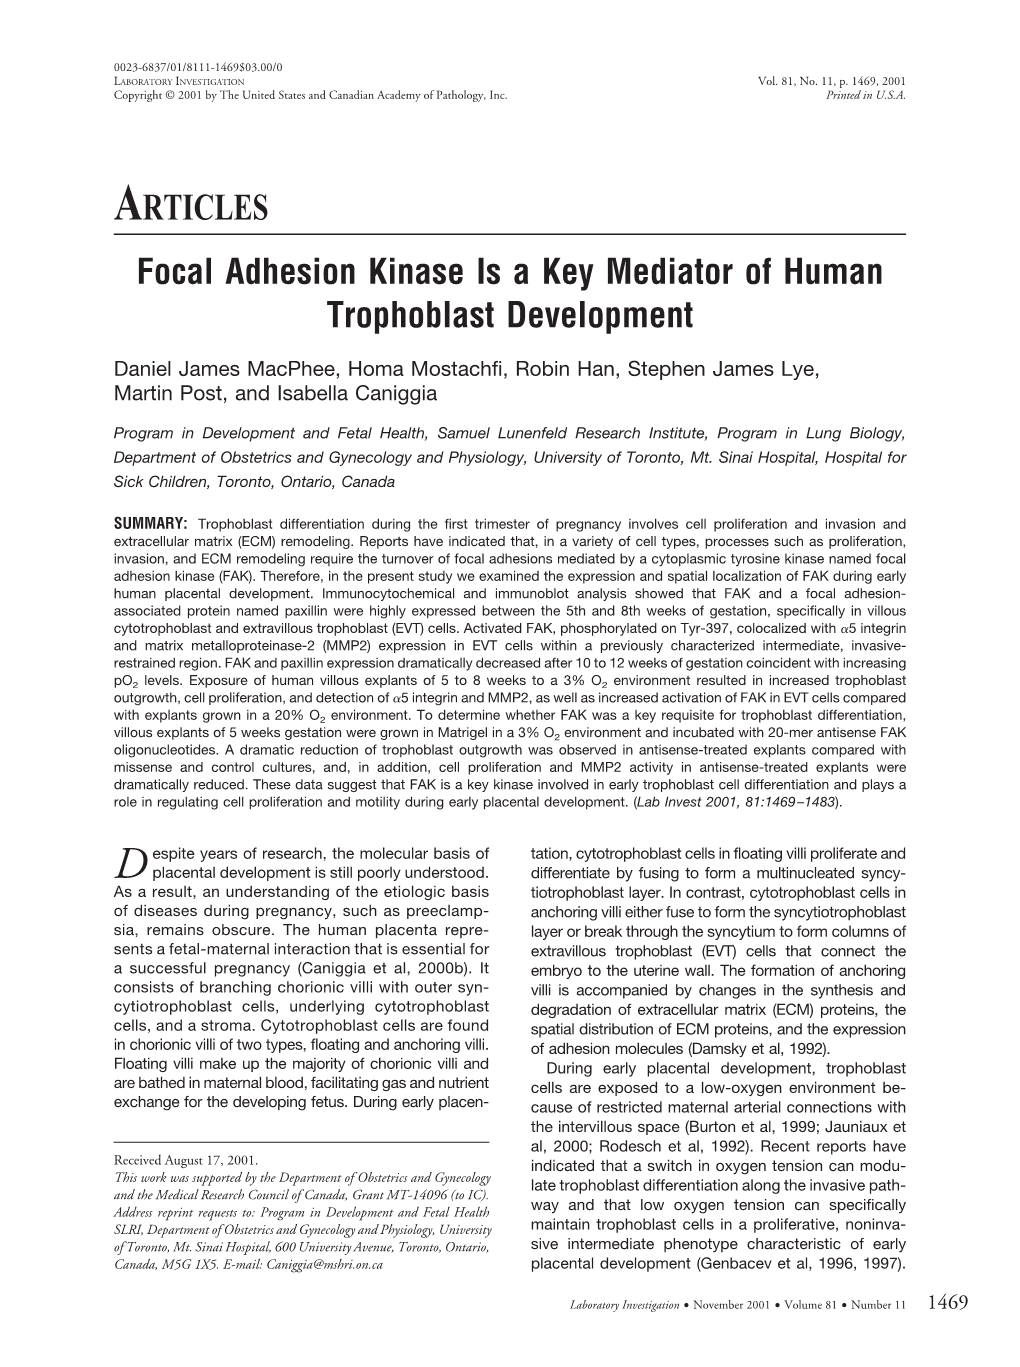 Focal Adhesion Kinase Is a Key Mediator of Human Trophoblast Development